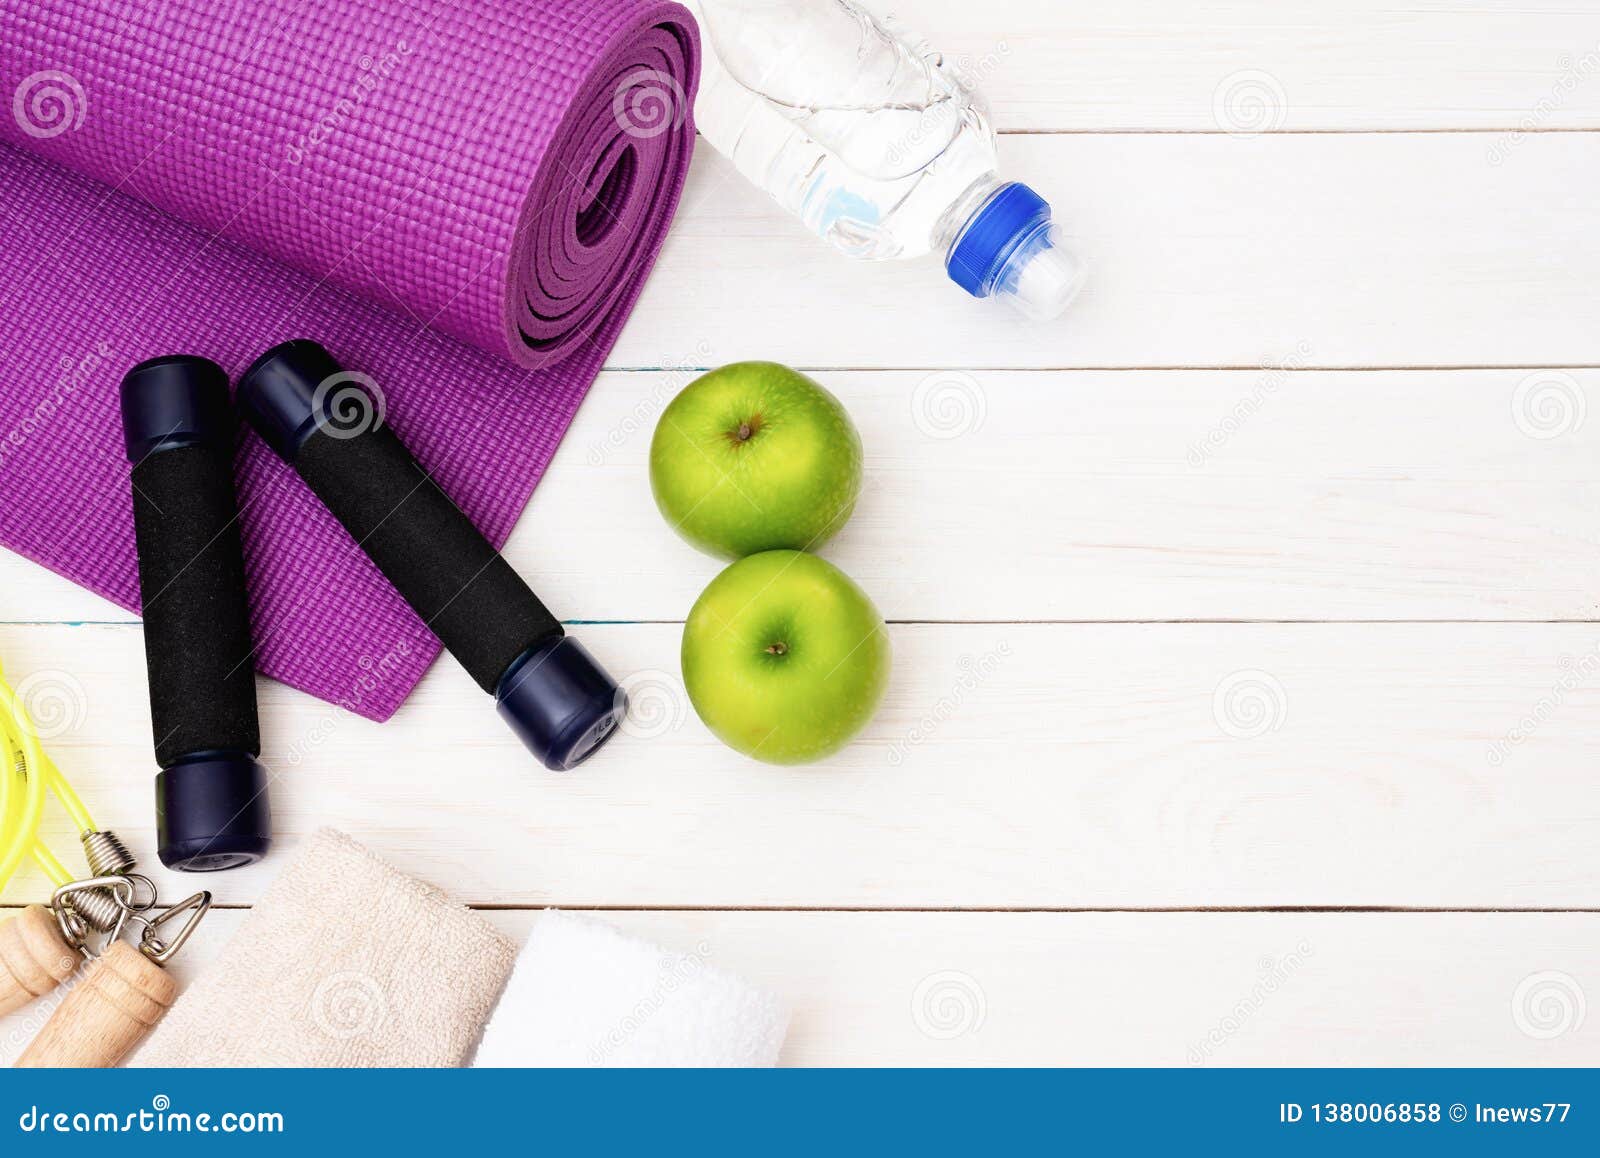 https://thumbs.dreamstime.com/z/set-yoga-practice-purple-mat-dumbbell-towel-bottle-water-green-apple-jump-rope-exercise-equipment-top-view-copy-space-138006858.jpg